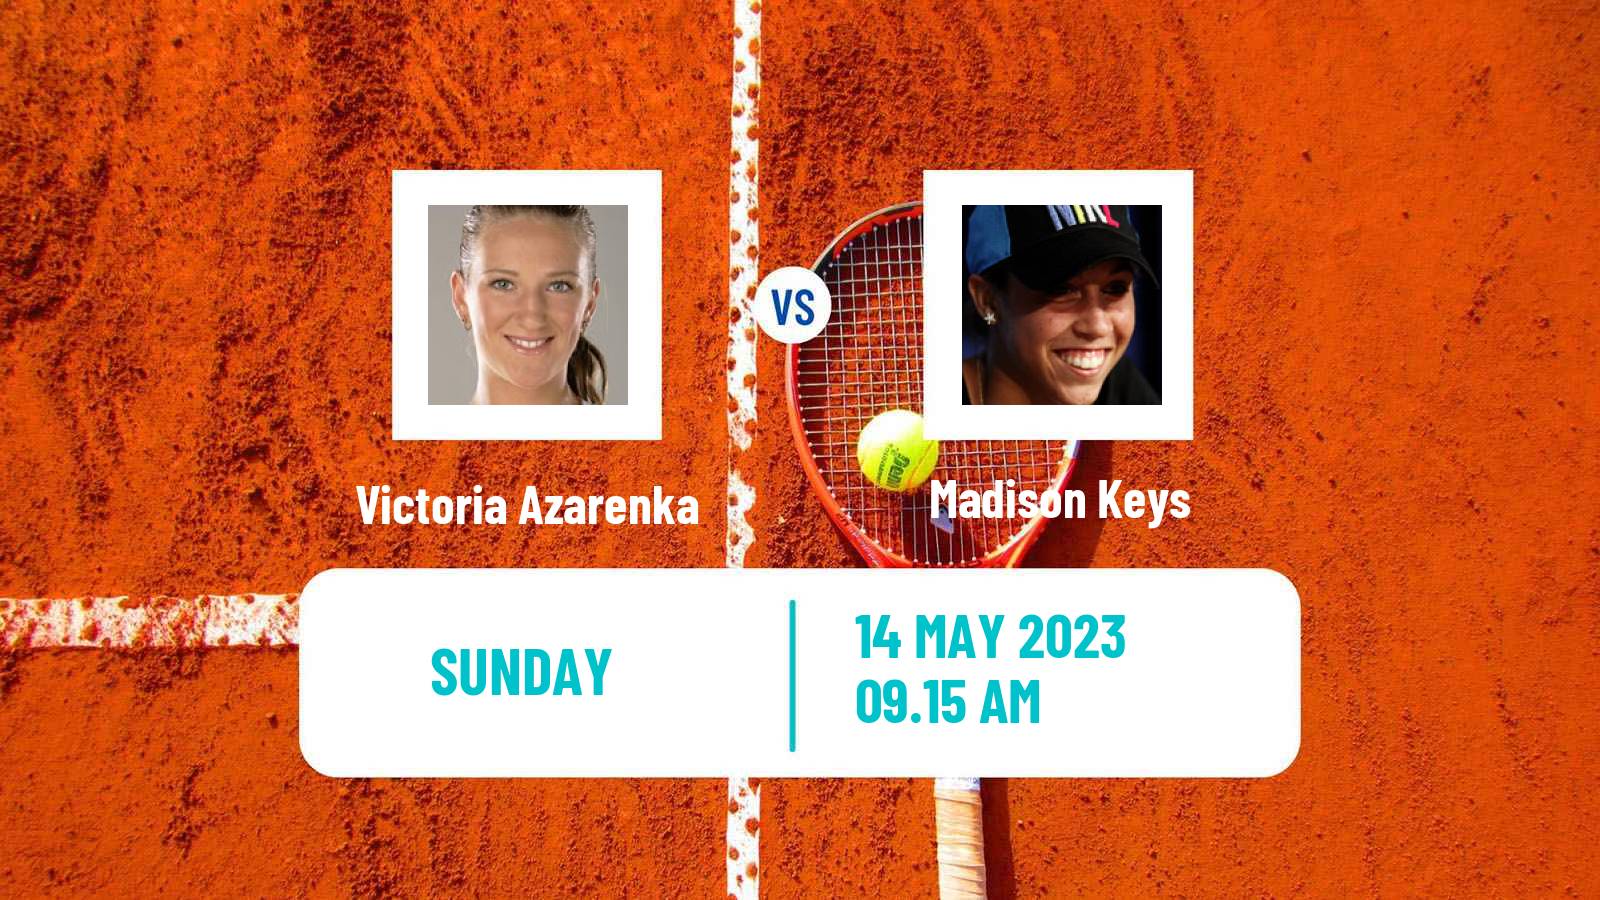 Tennis WTA Roma Victoria Azarenka - Madison Keys